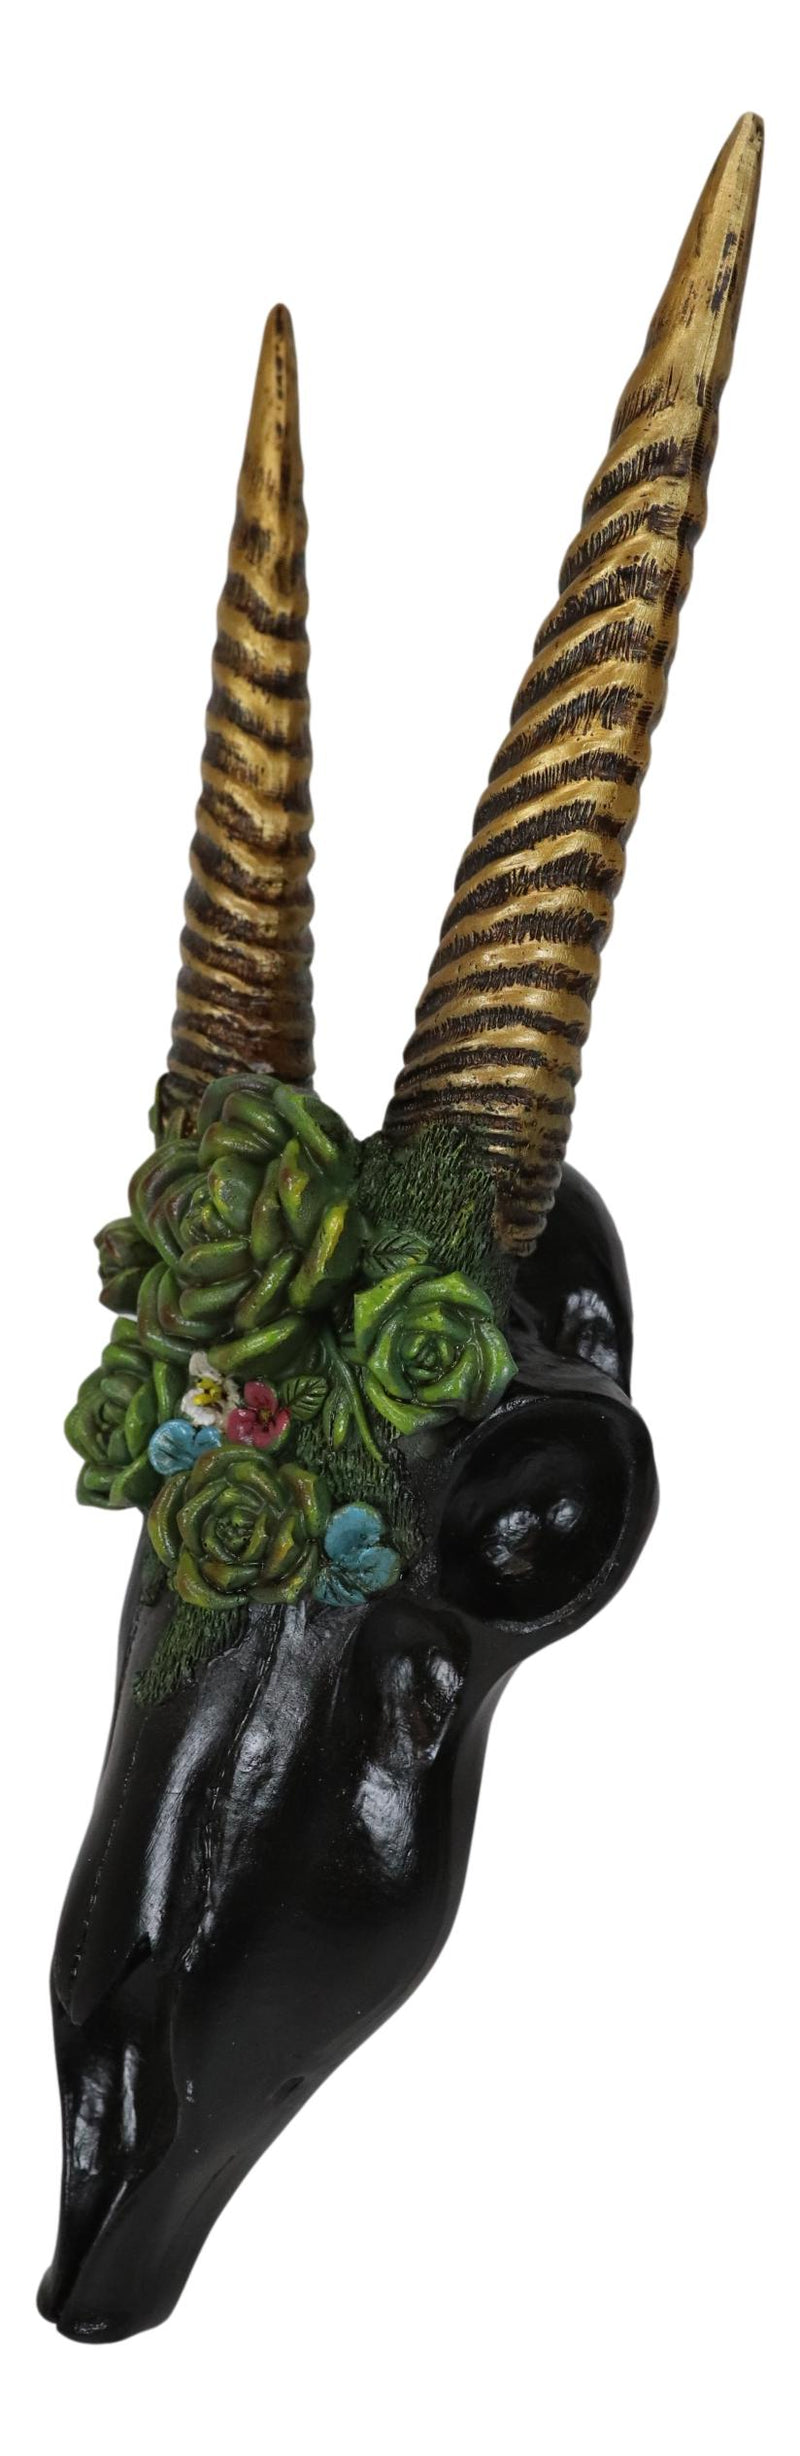 Western Rustic Black Rhim Gazelle Antelope Skull With Roses Wall Trophy Decor